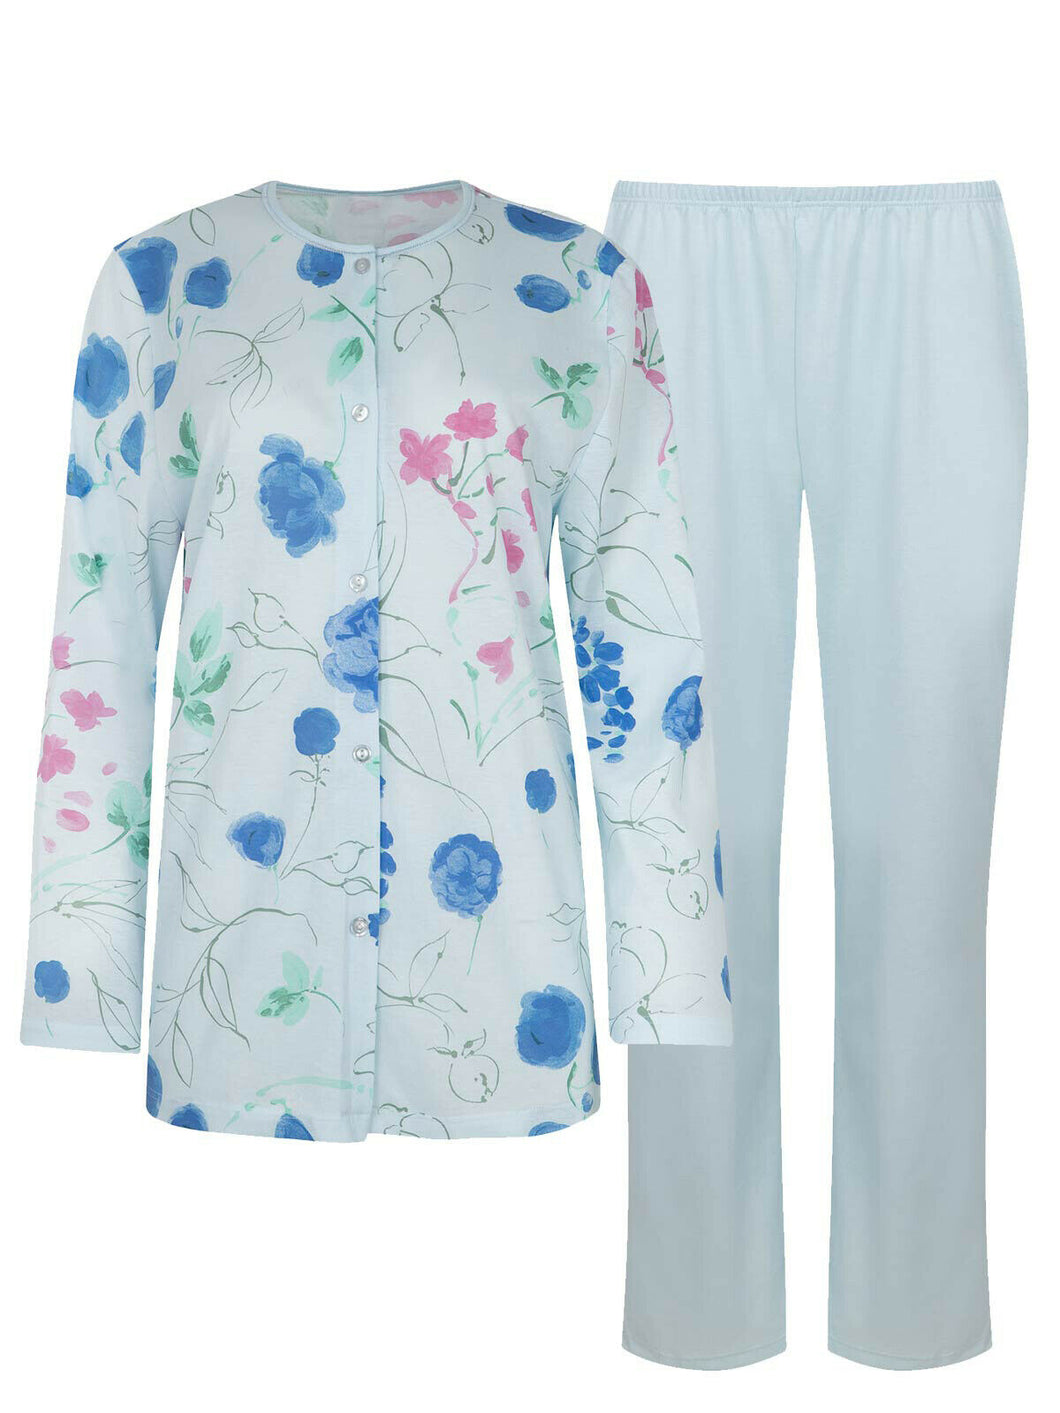 Blue Floral Longsleeve Pyjamas Set